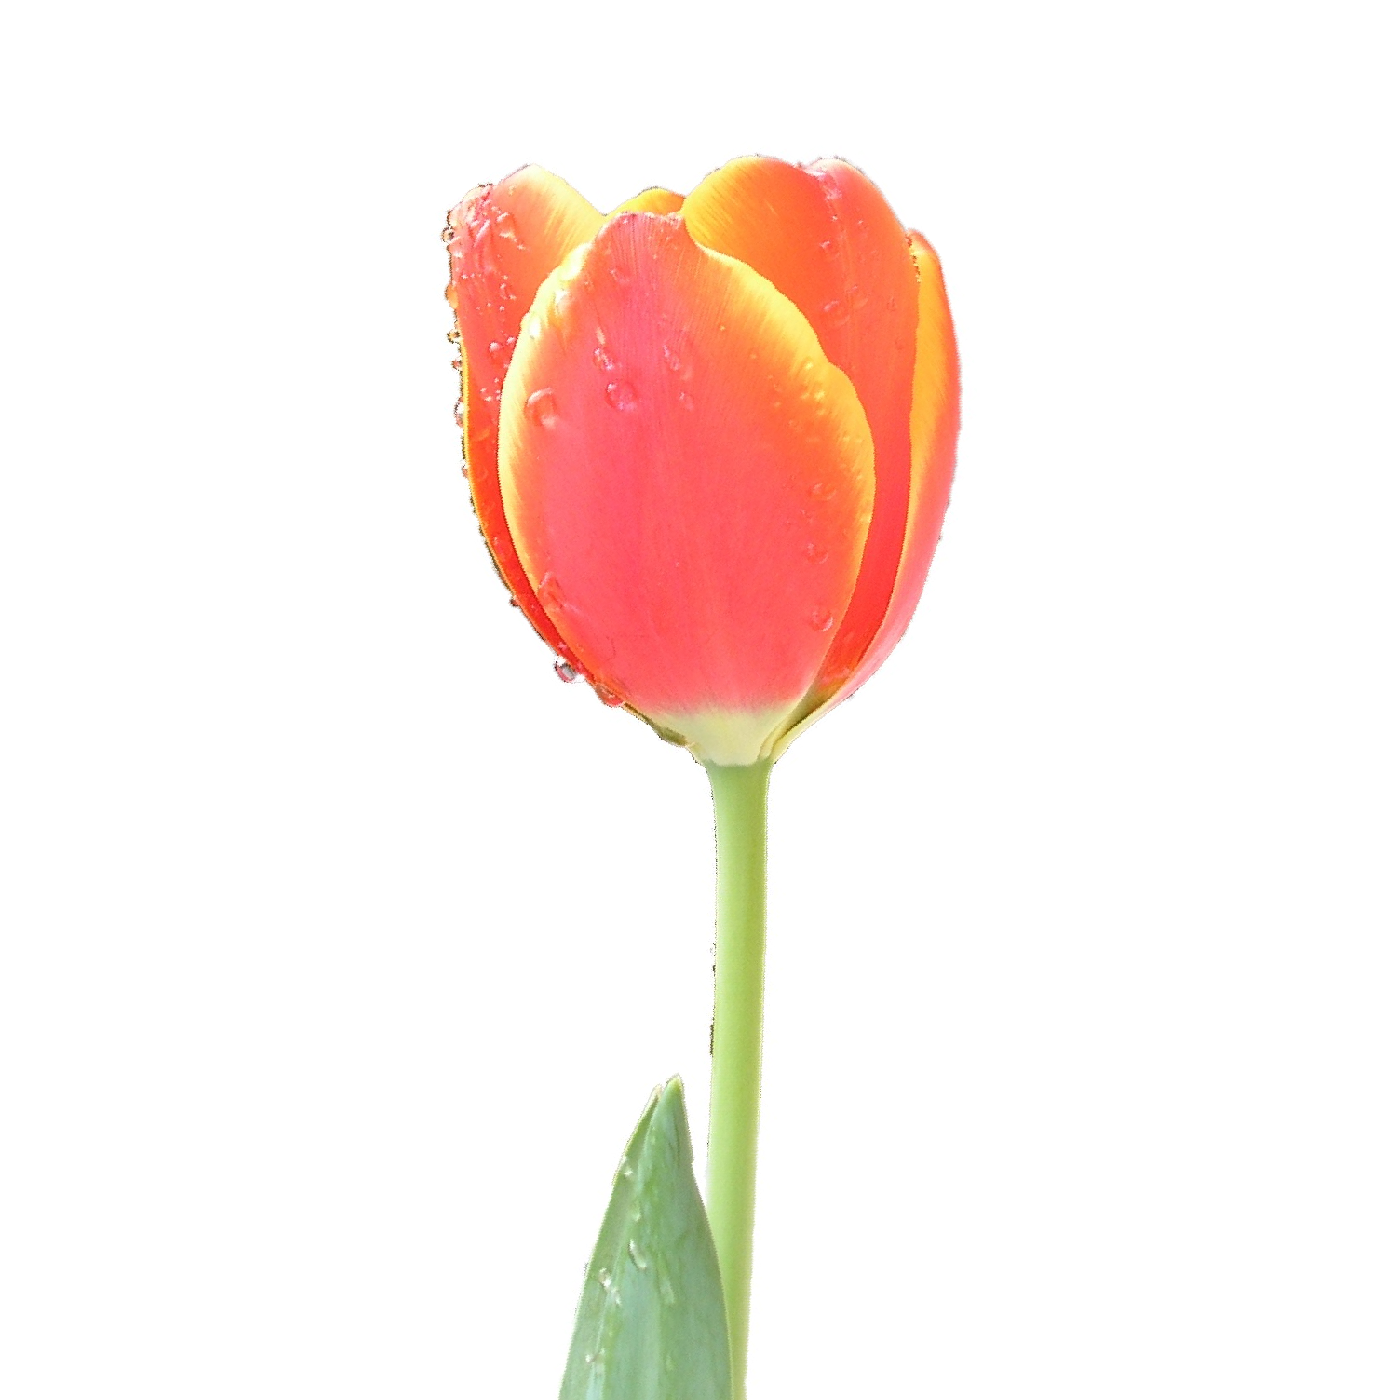 File:Tulip single upright.PNG